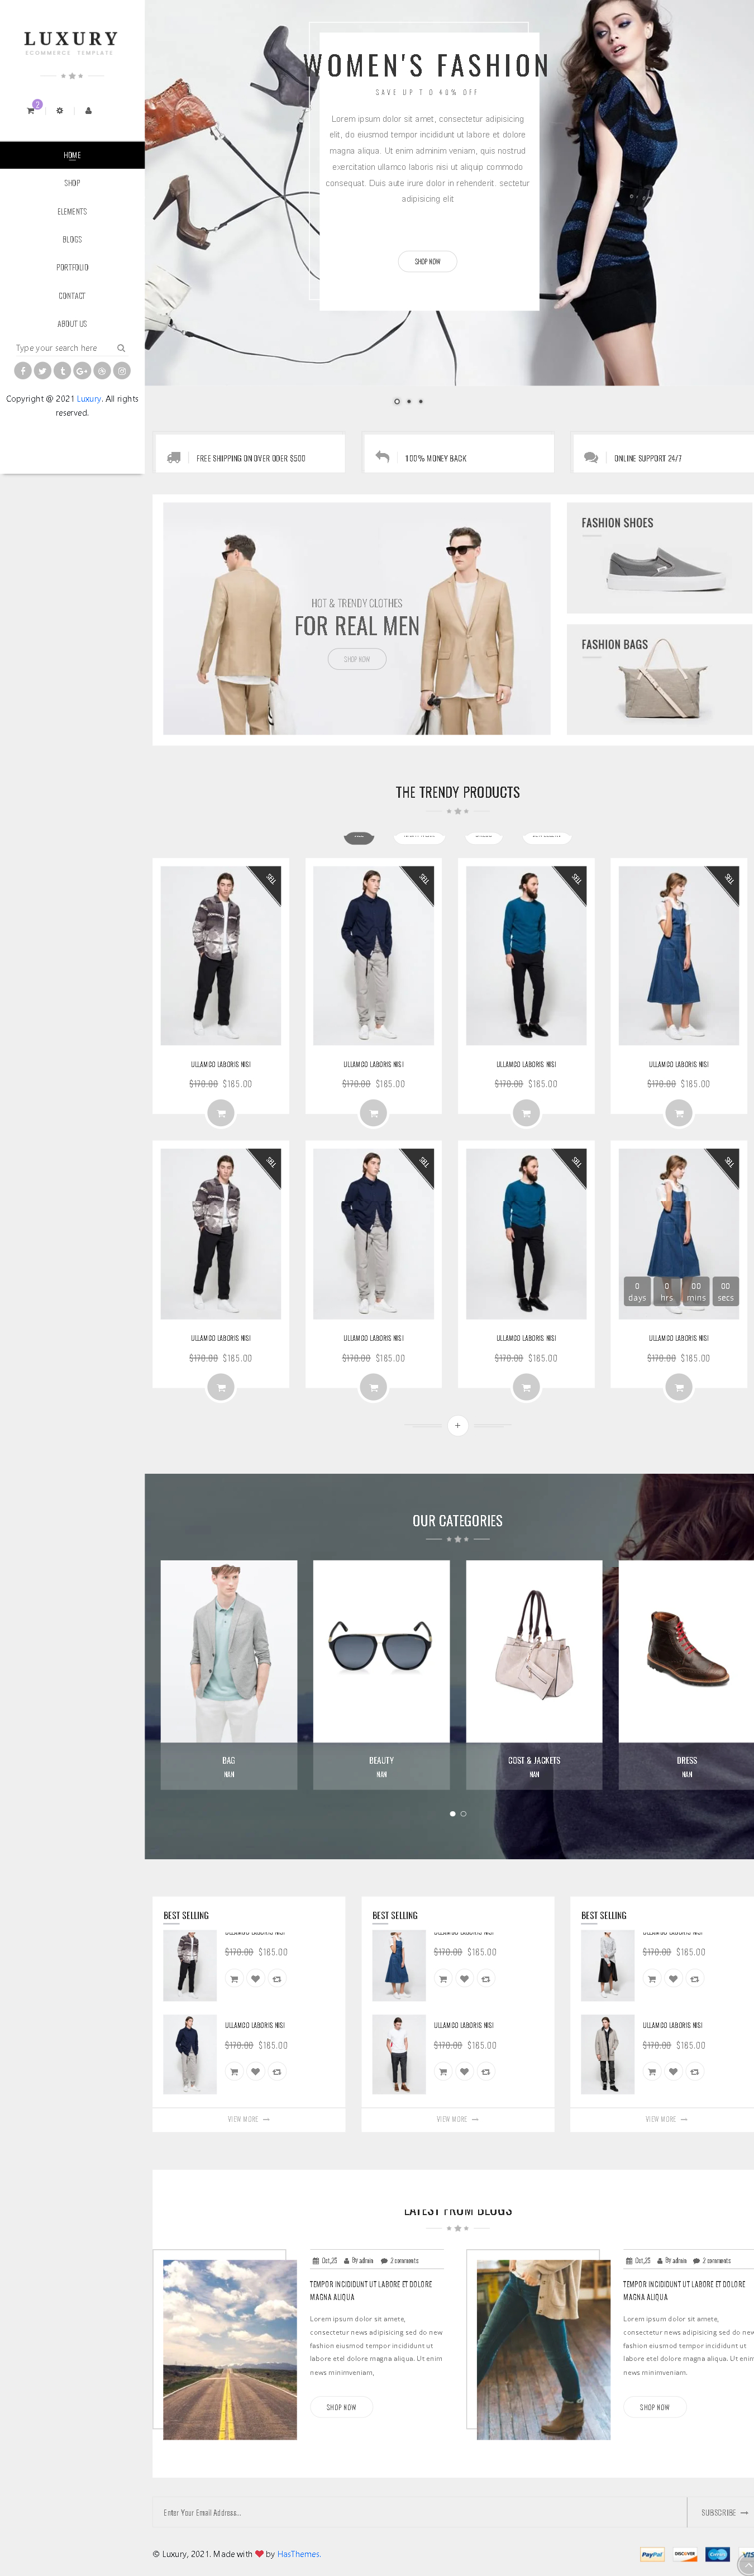 mẫu giao diện website thời trang luxury